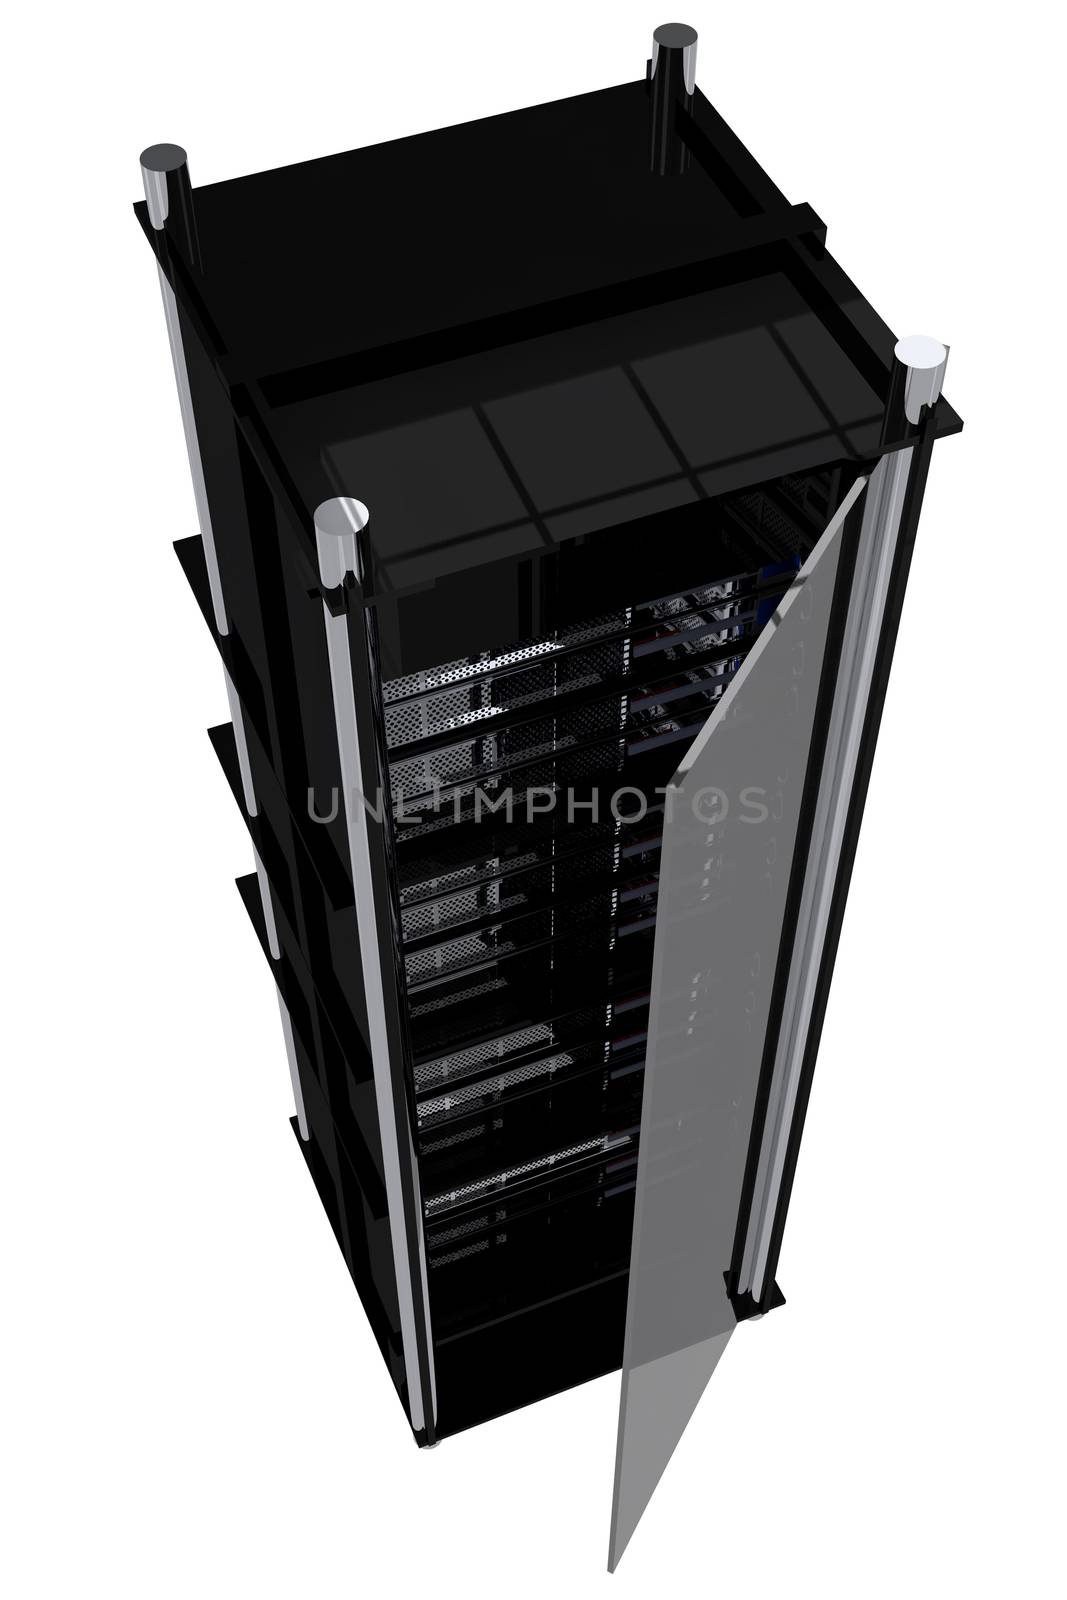 MOdern Servers Rack - Black Hosting Rack with Glass Door. Many Servers Inside.